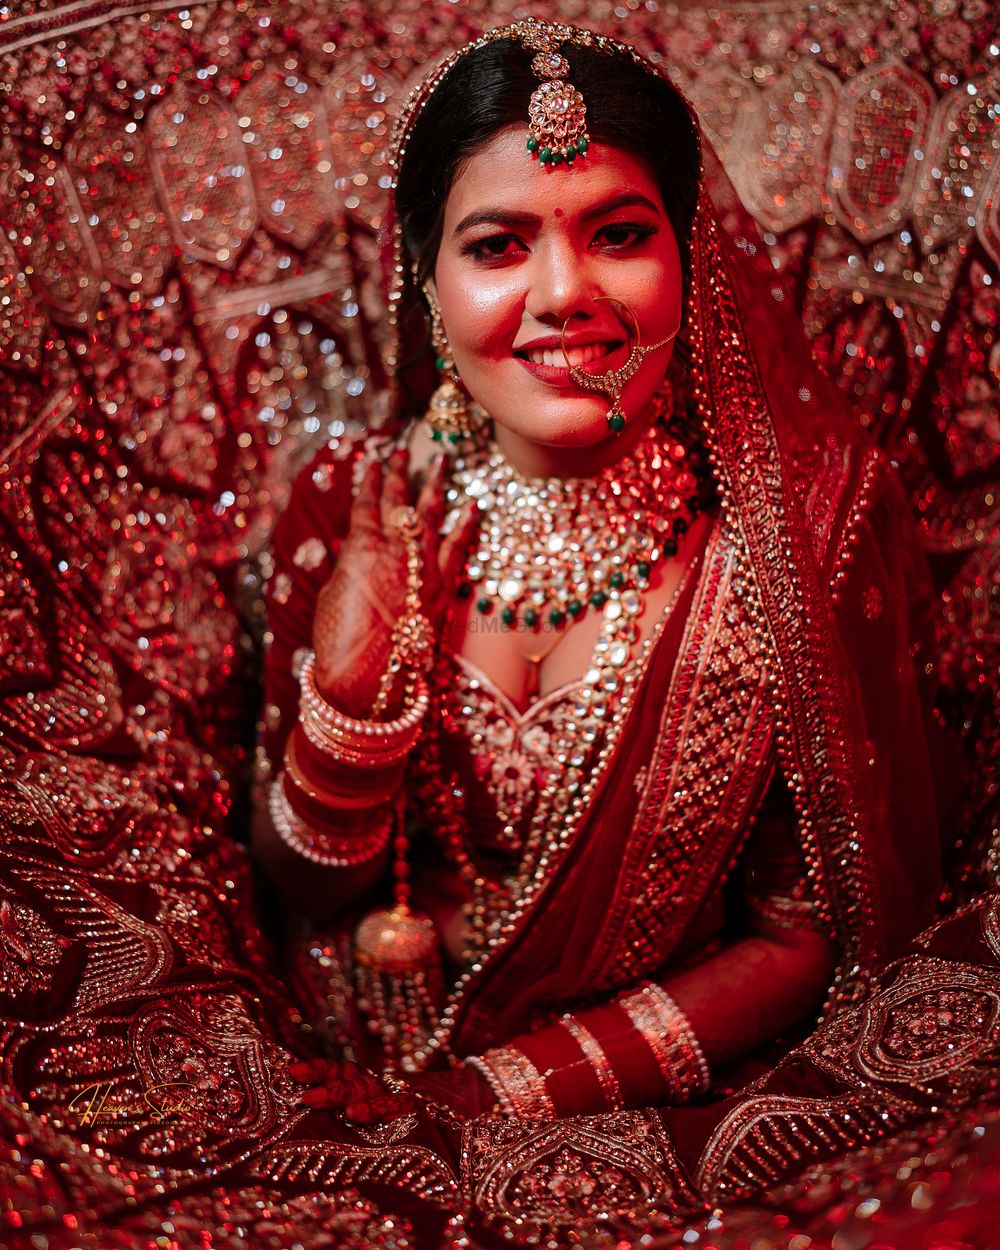 Photo From Priyanka Weds Amit - By Heaven's Studio